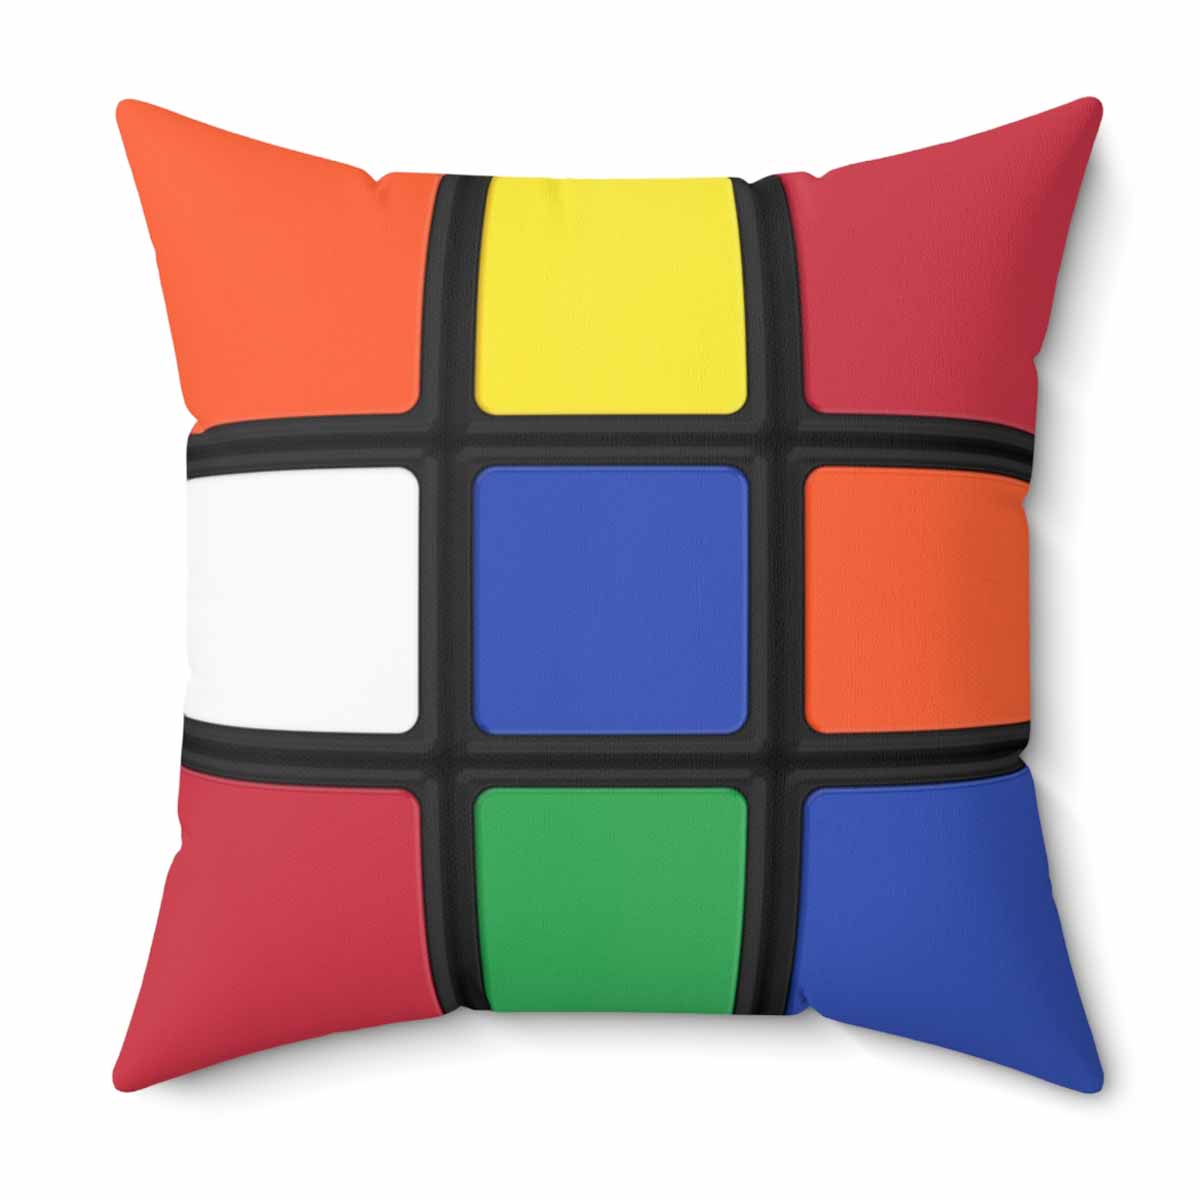 Rubik's Cube Pillow